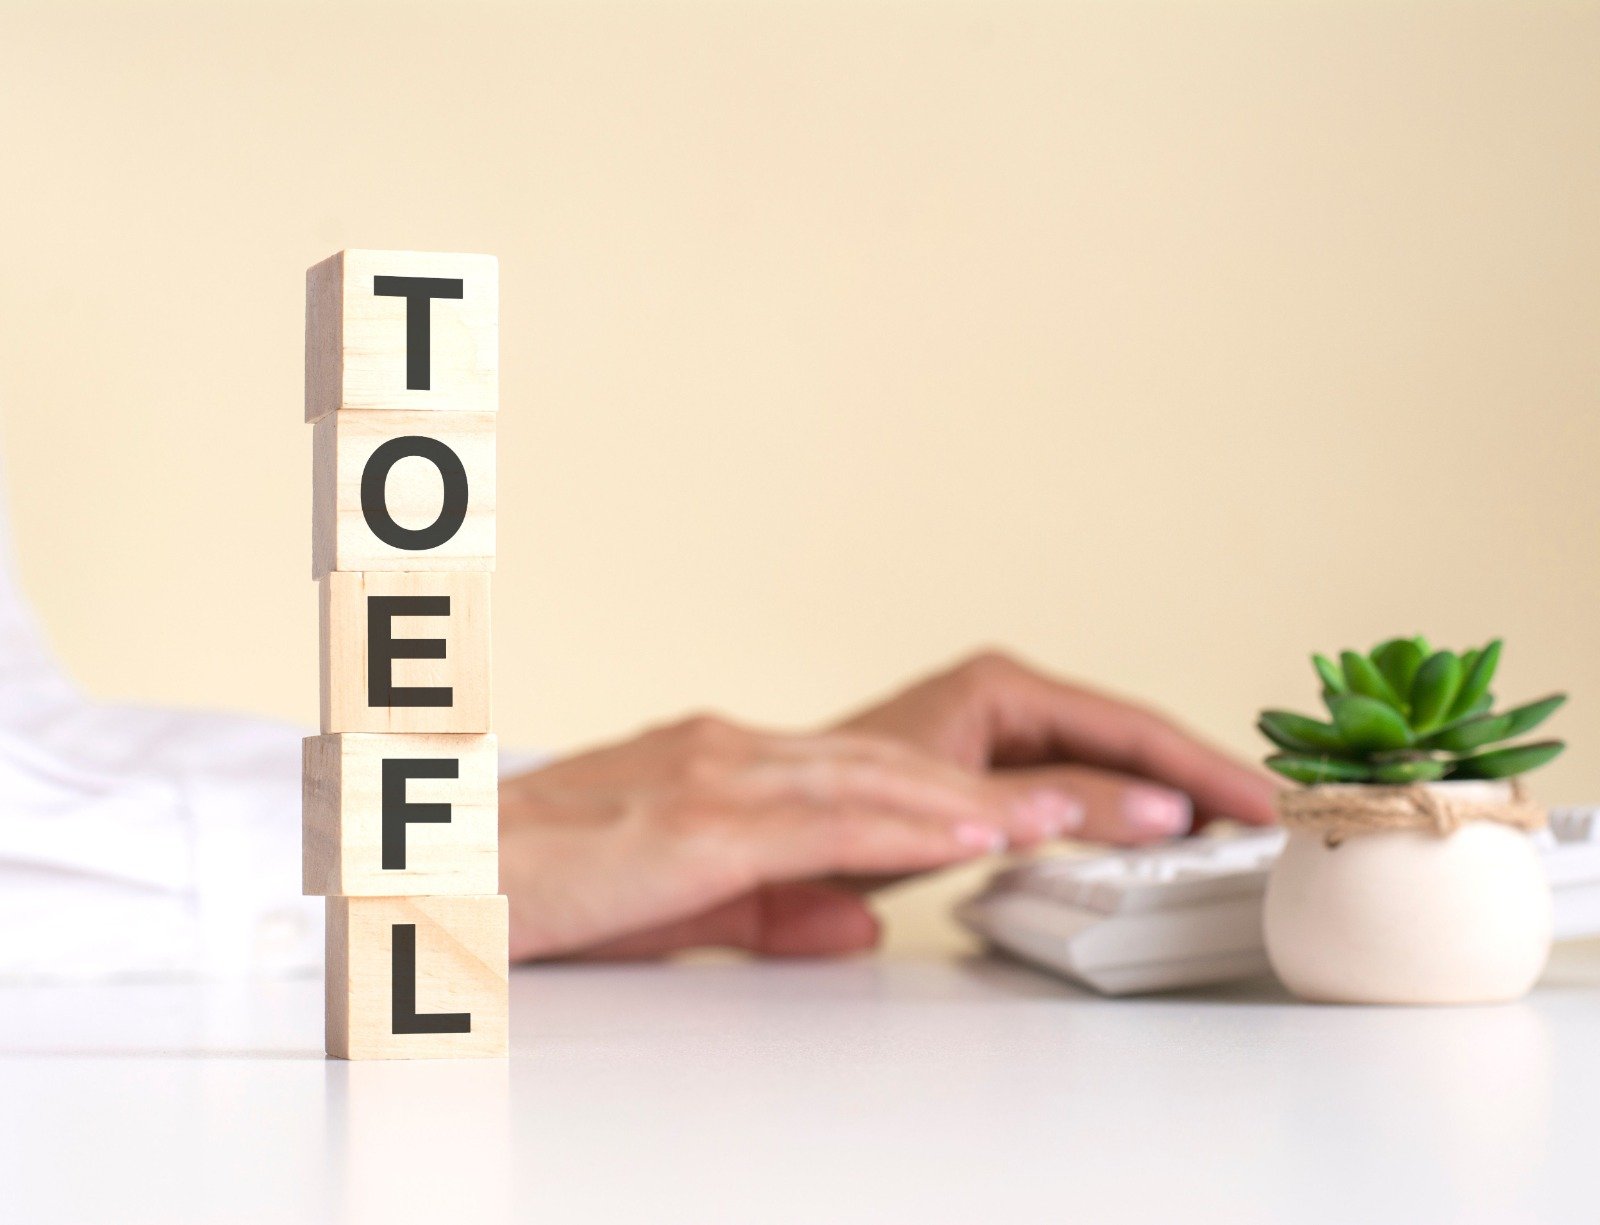 Smarten up TOEFL: Your Key to Global Education.